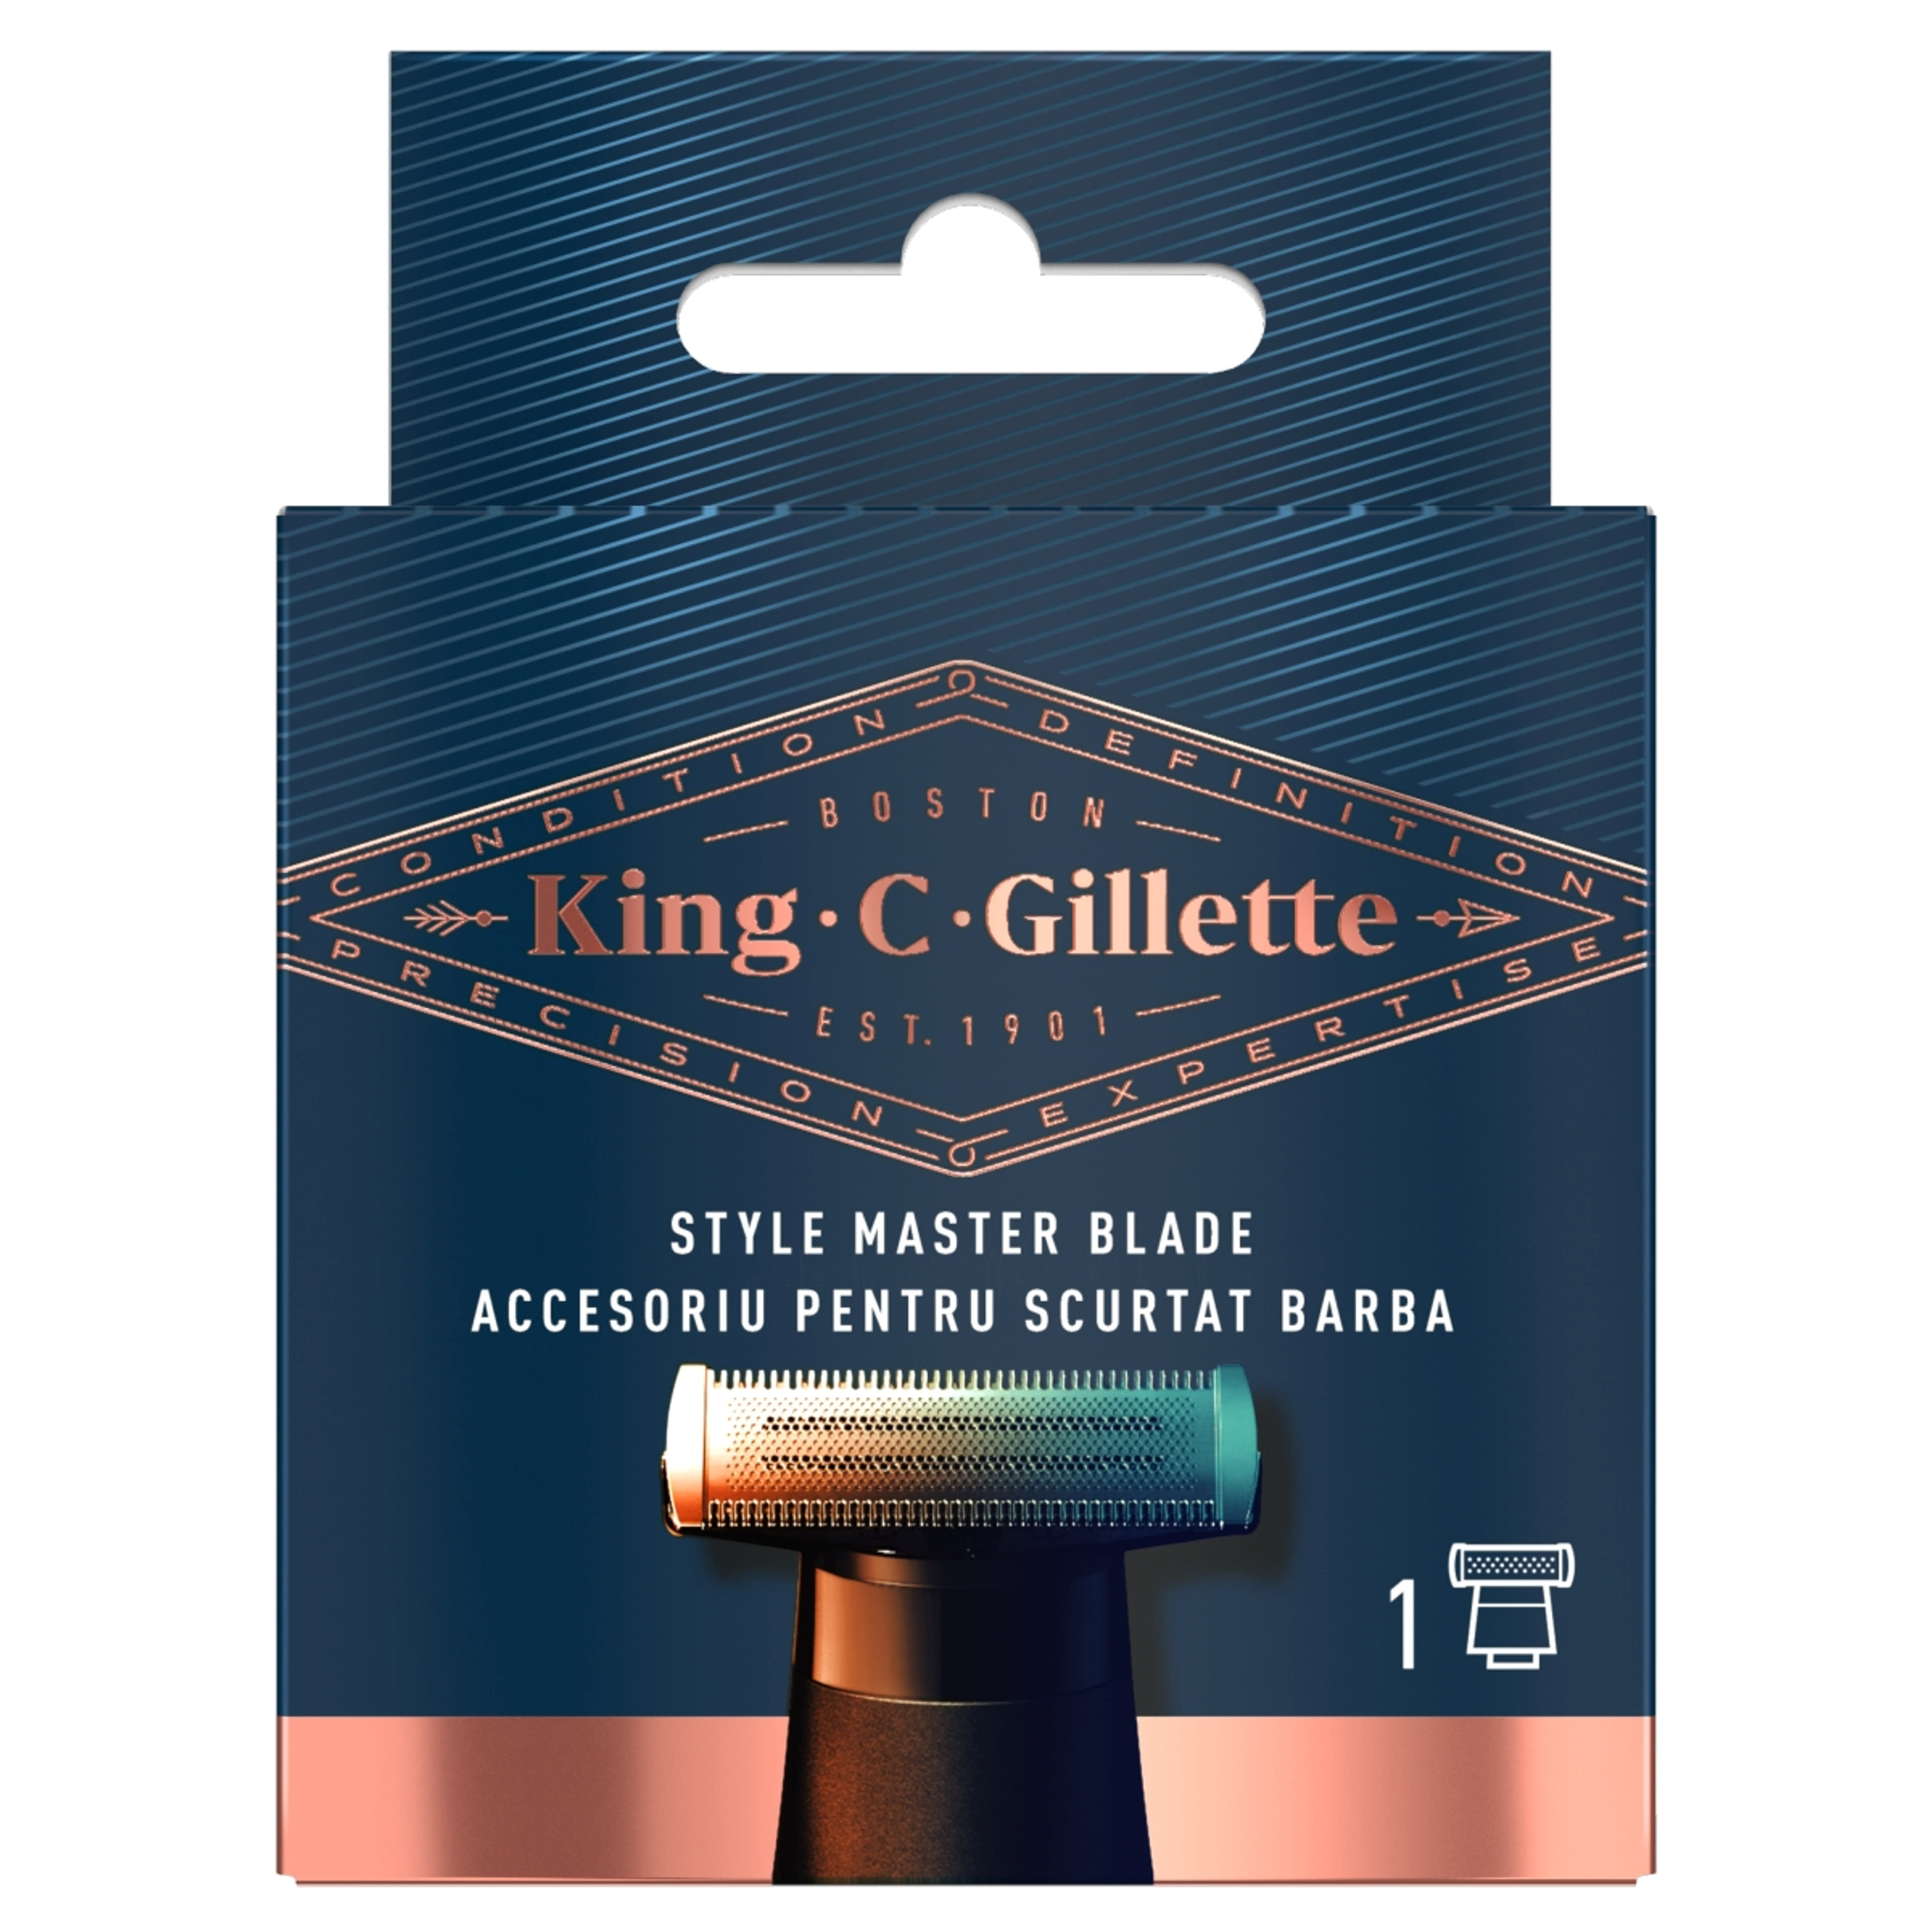 King C. Gillette Style Master borotvabetét - 1 db